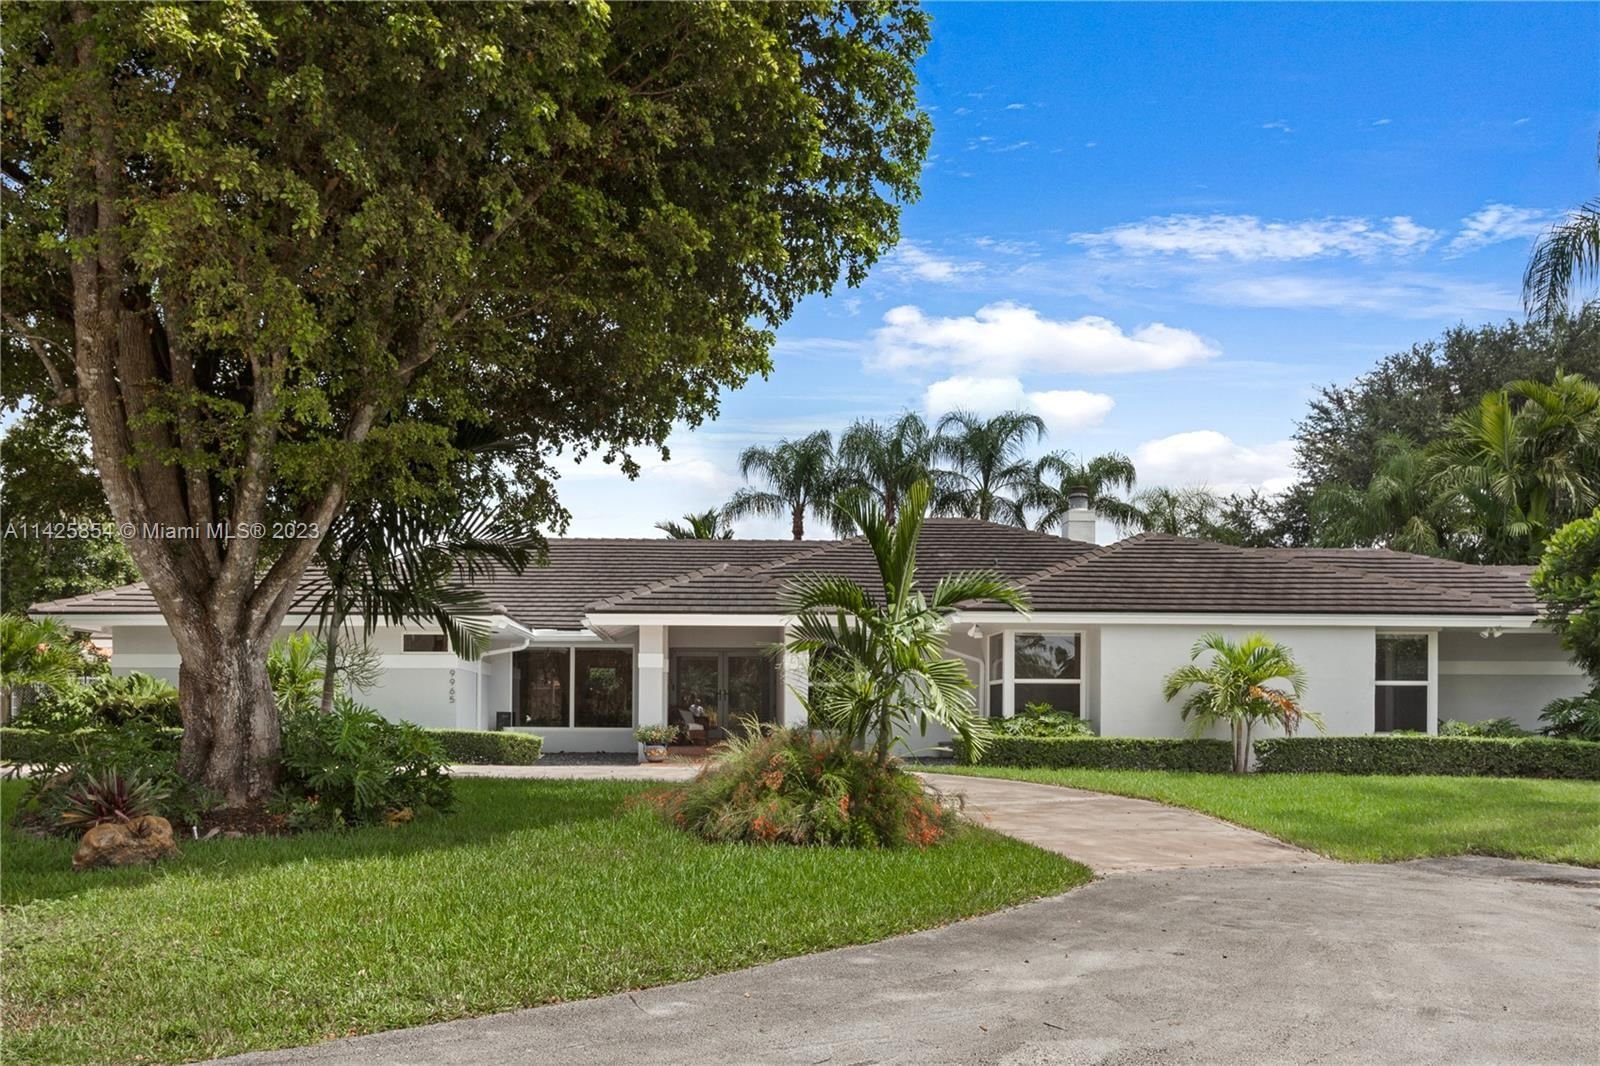 Real estate property located at 9965 125 Ter, Miami-Dade County, Miami, FL